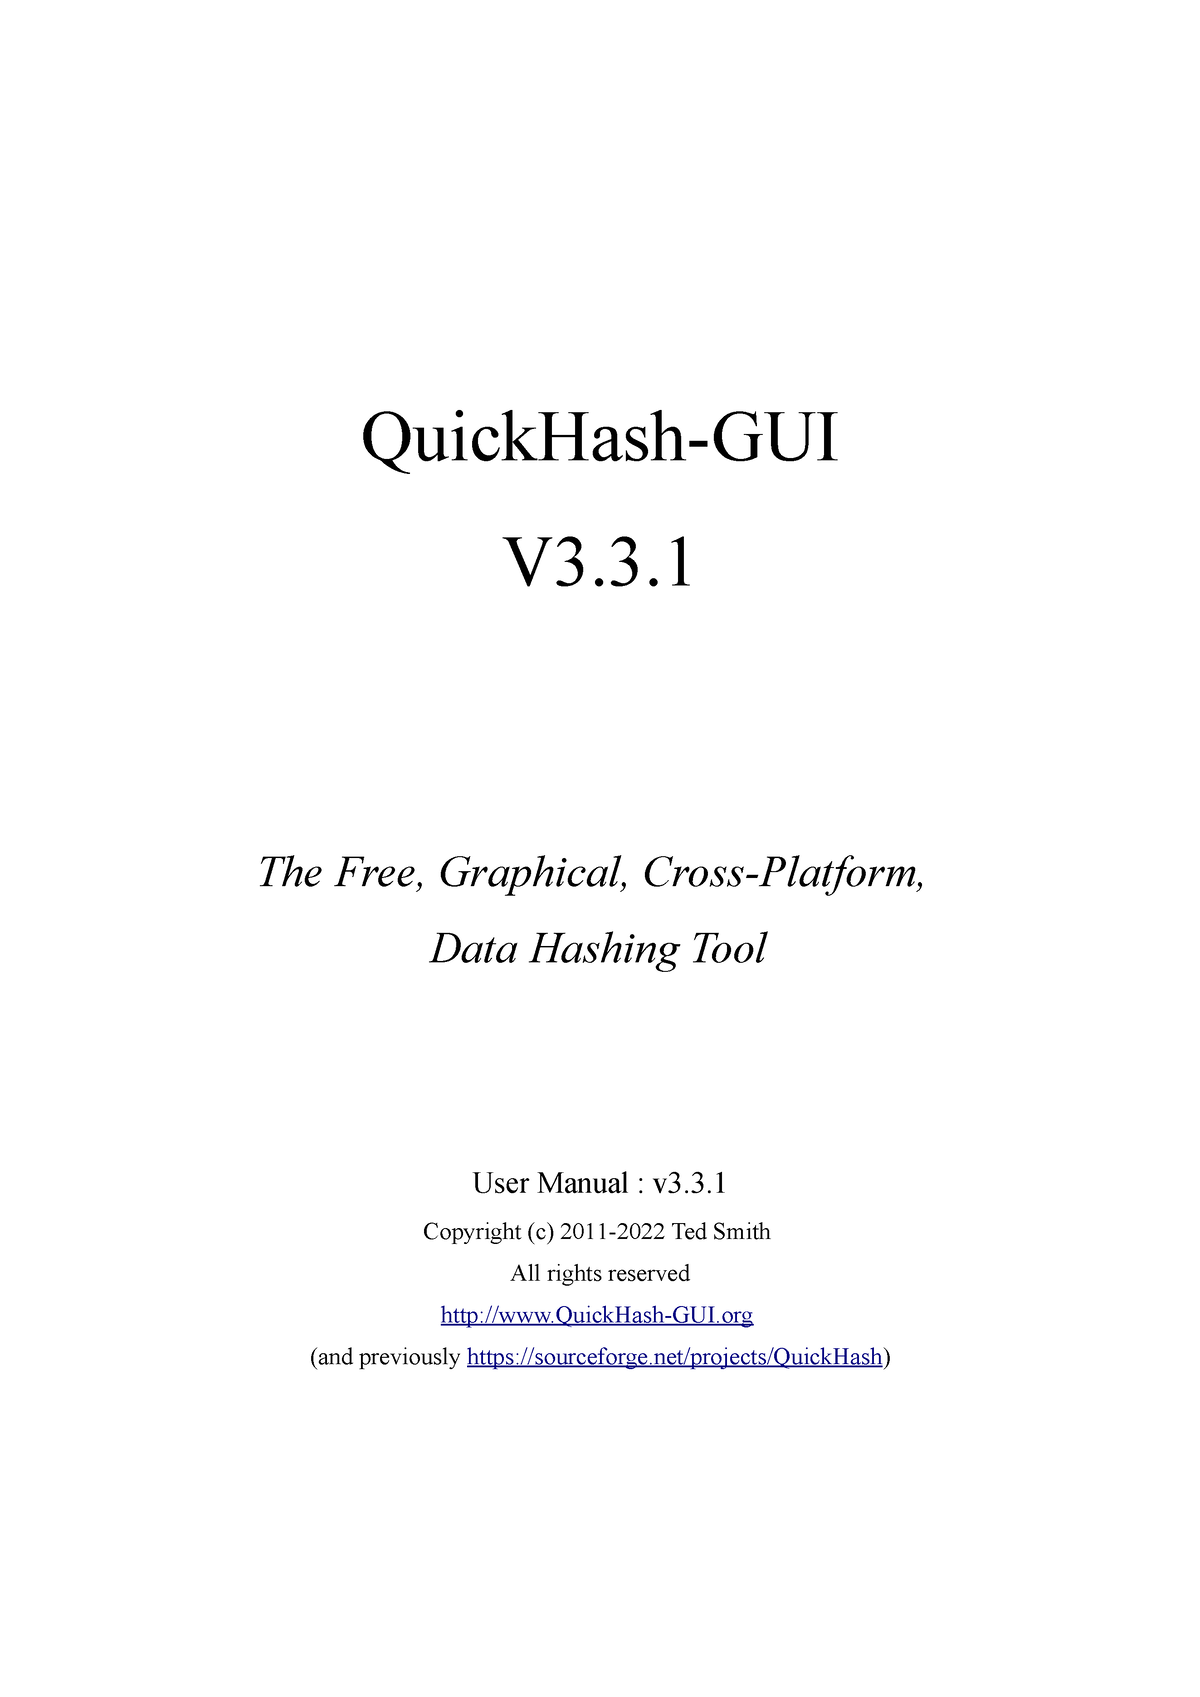 download the last version for apple QuickHash 3.3.4